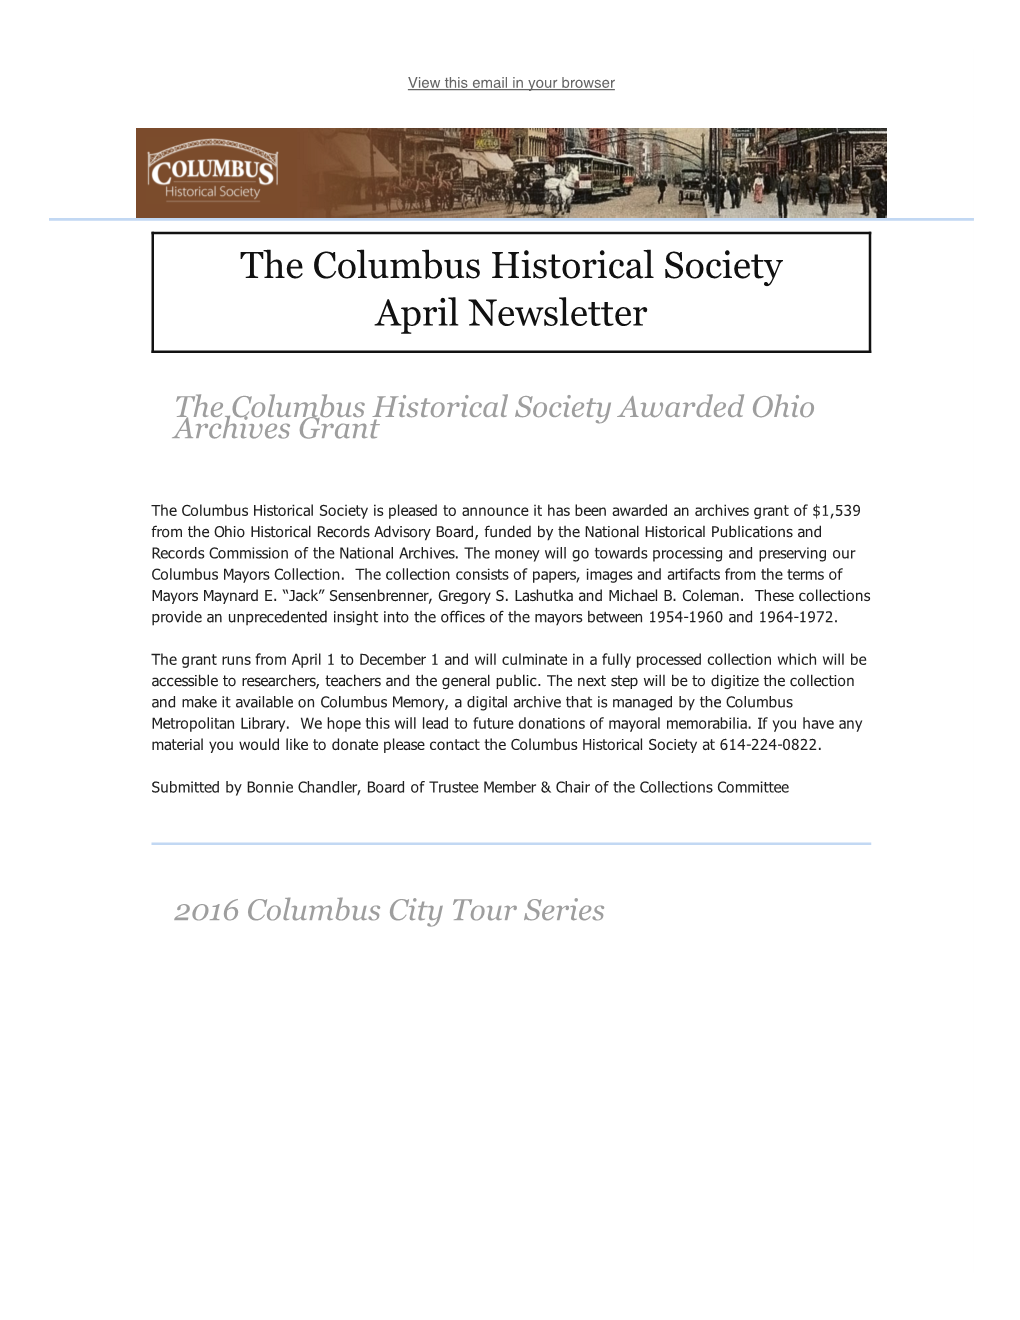 The Columbus Historical Society April Newsletter